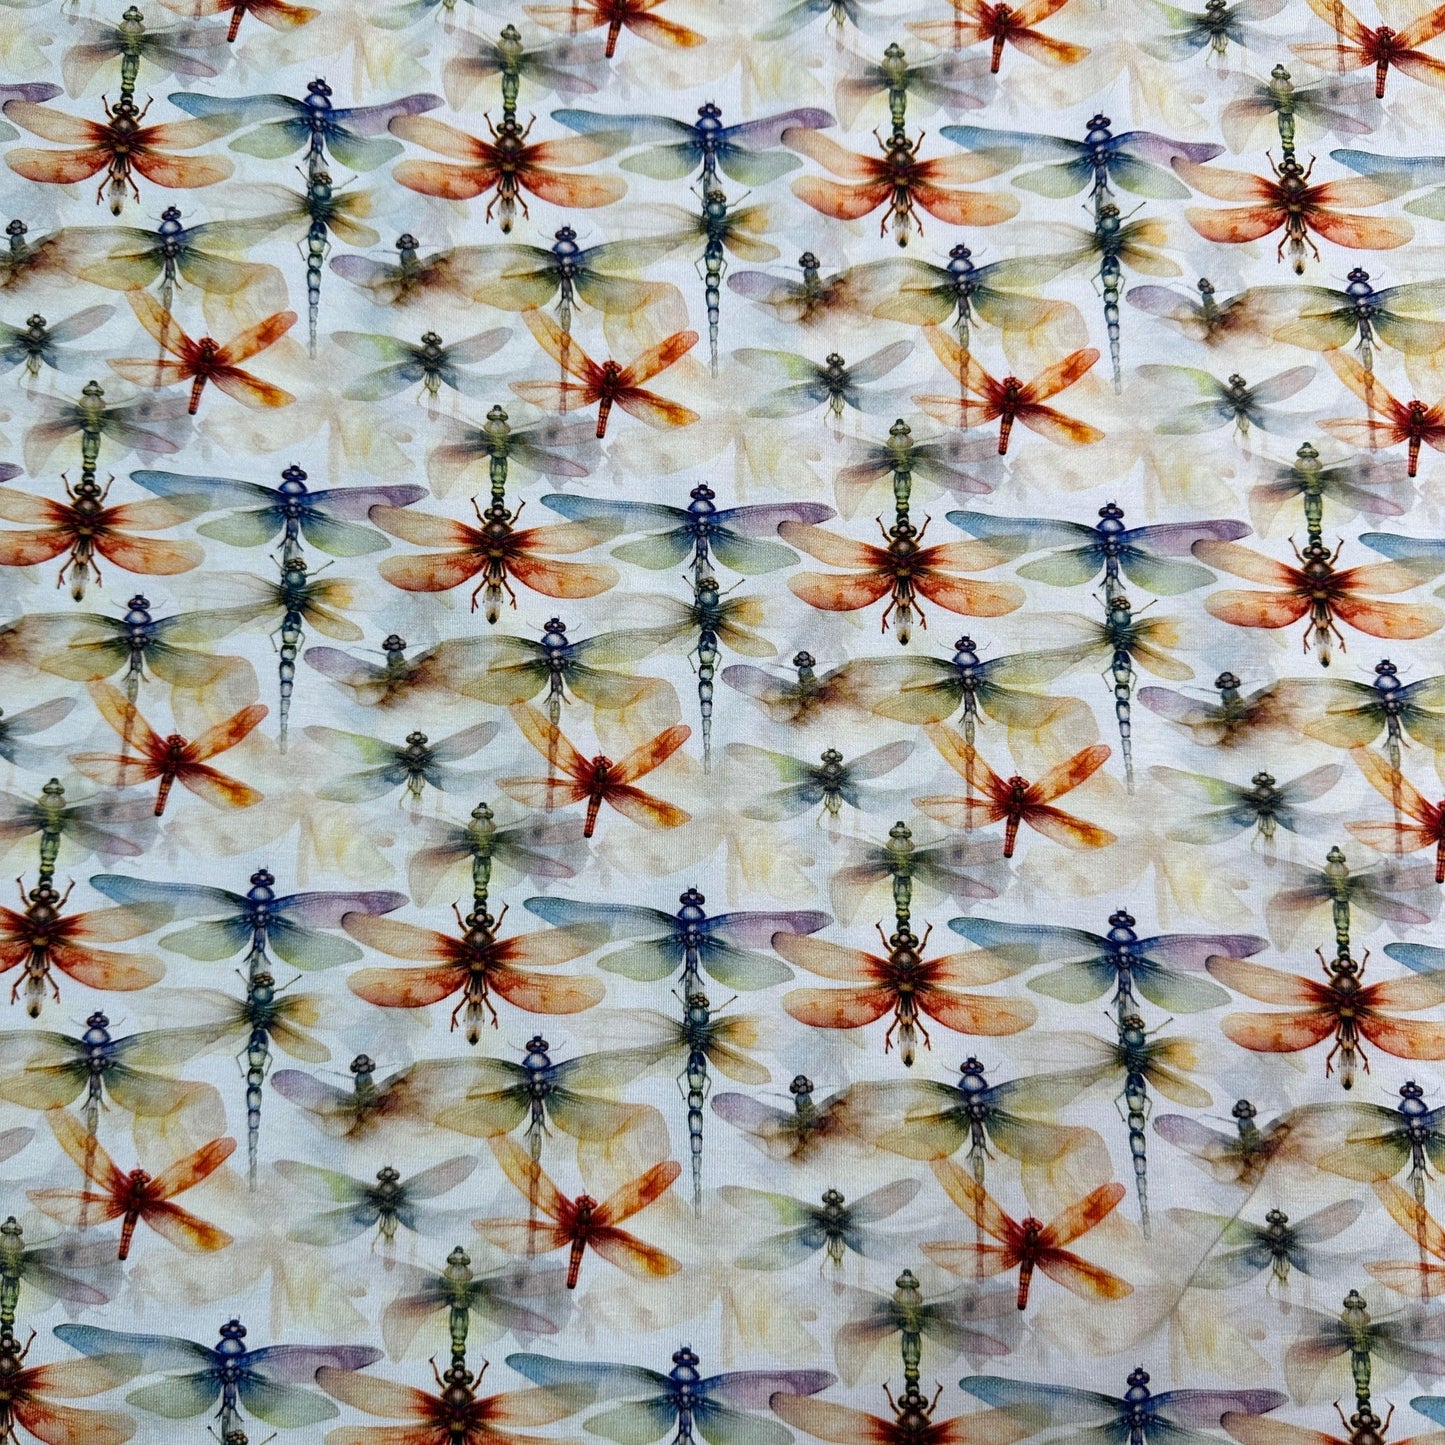 Orange Dragonflies on Organic Cotton/Spandex Jersey Fabric - Nature's Fabrics